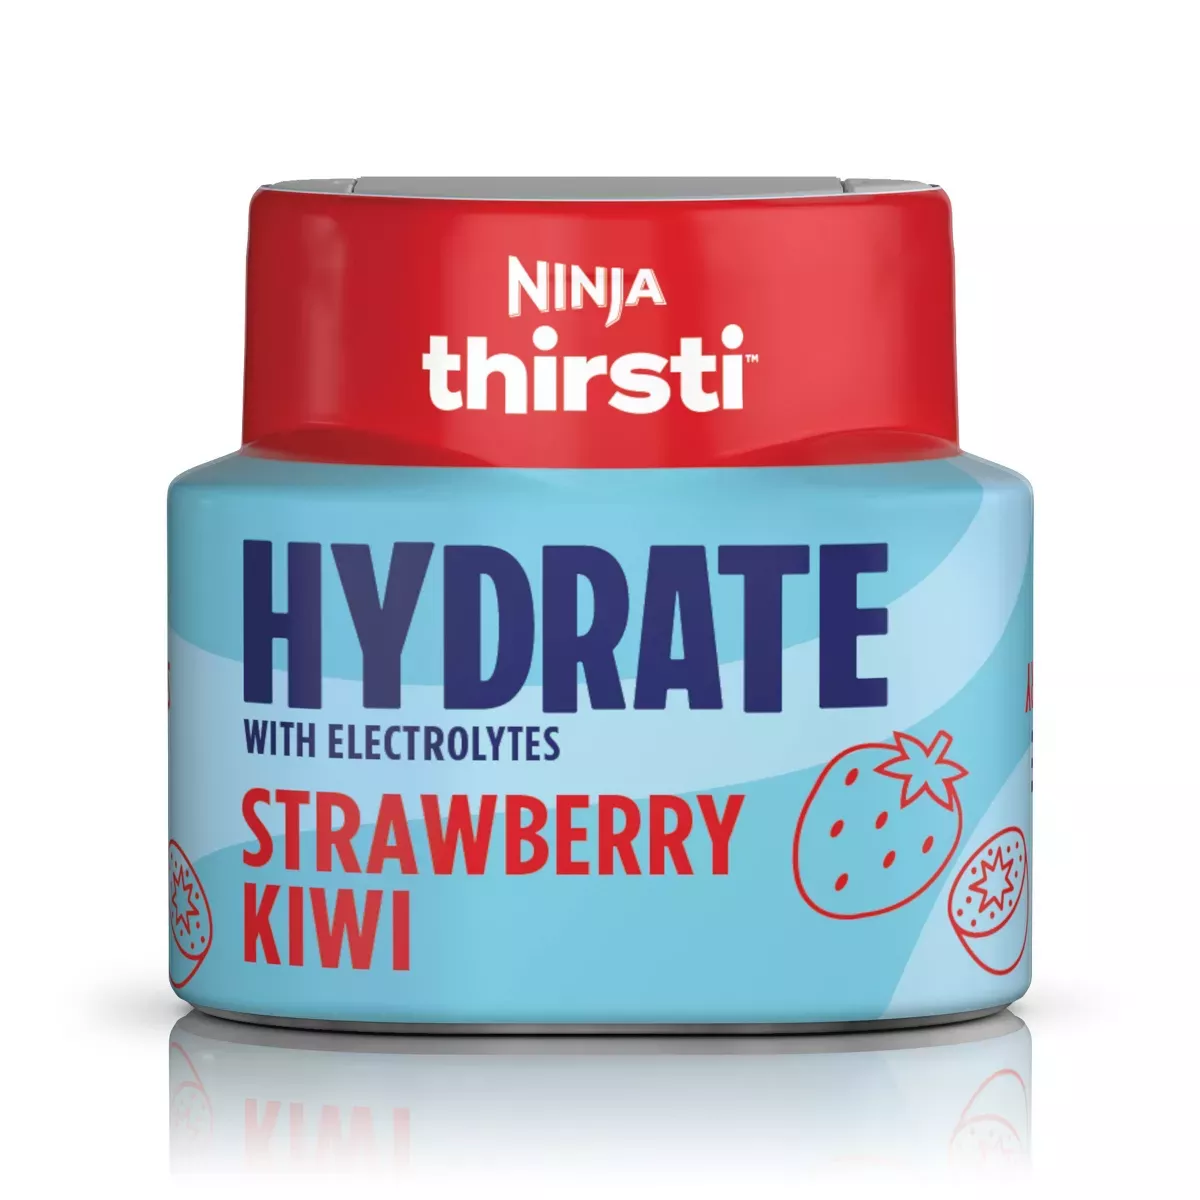 Ninja Thirsti Drink System Black Wc1001 : Target